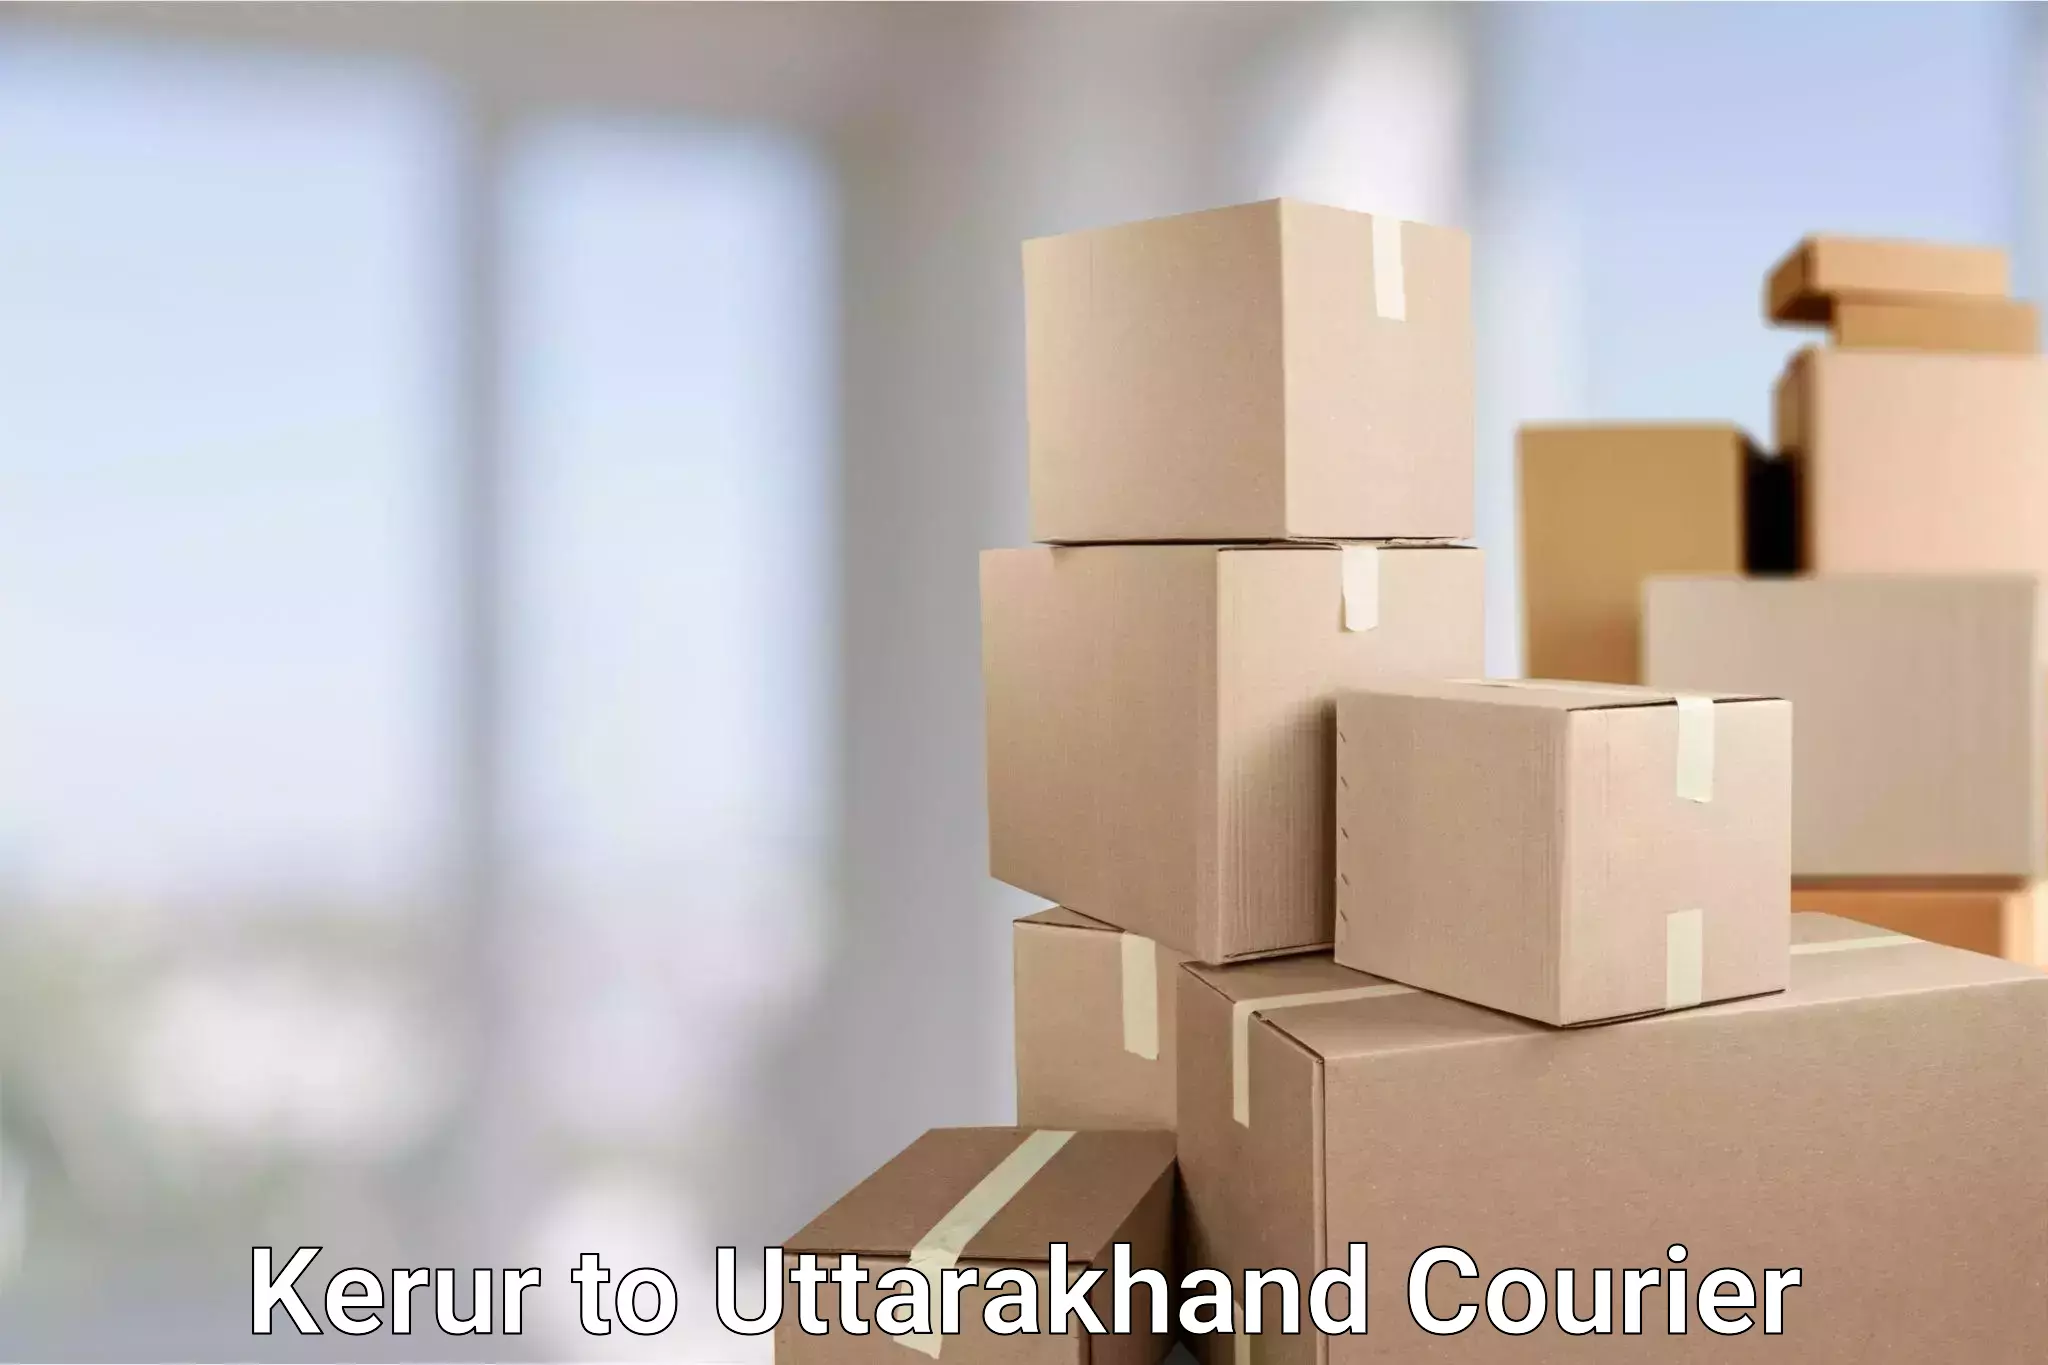 Efficient parcel service Kerur to Udham Singh Nagar